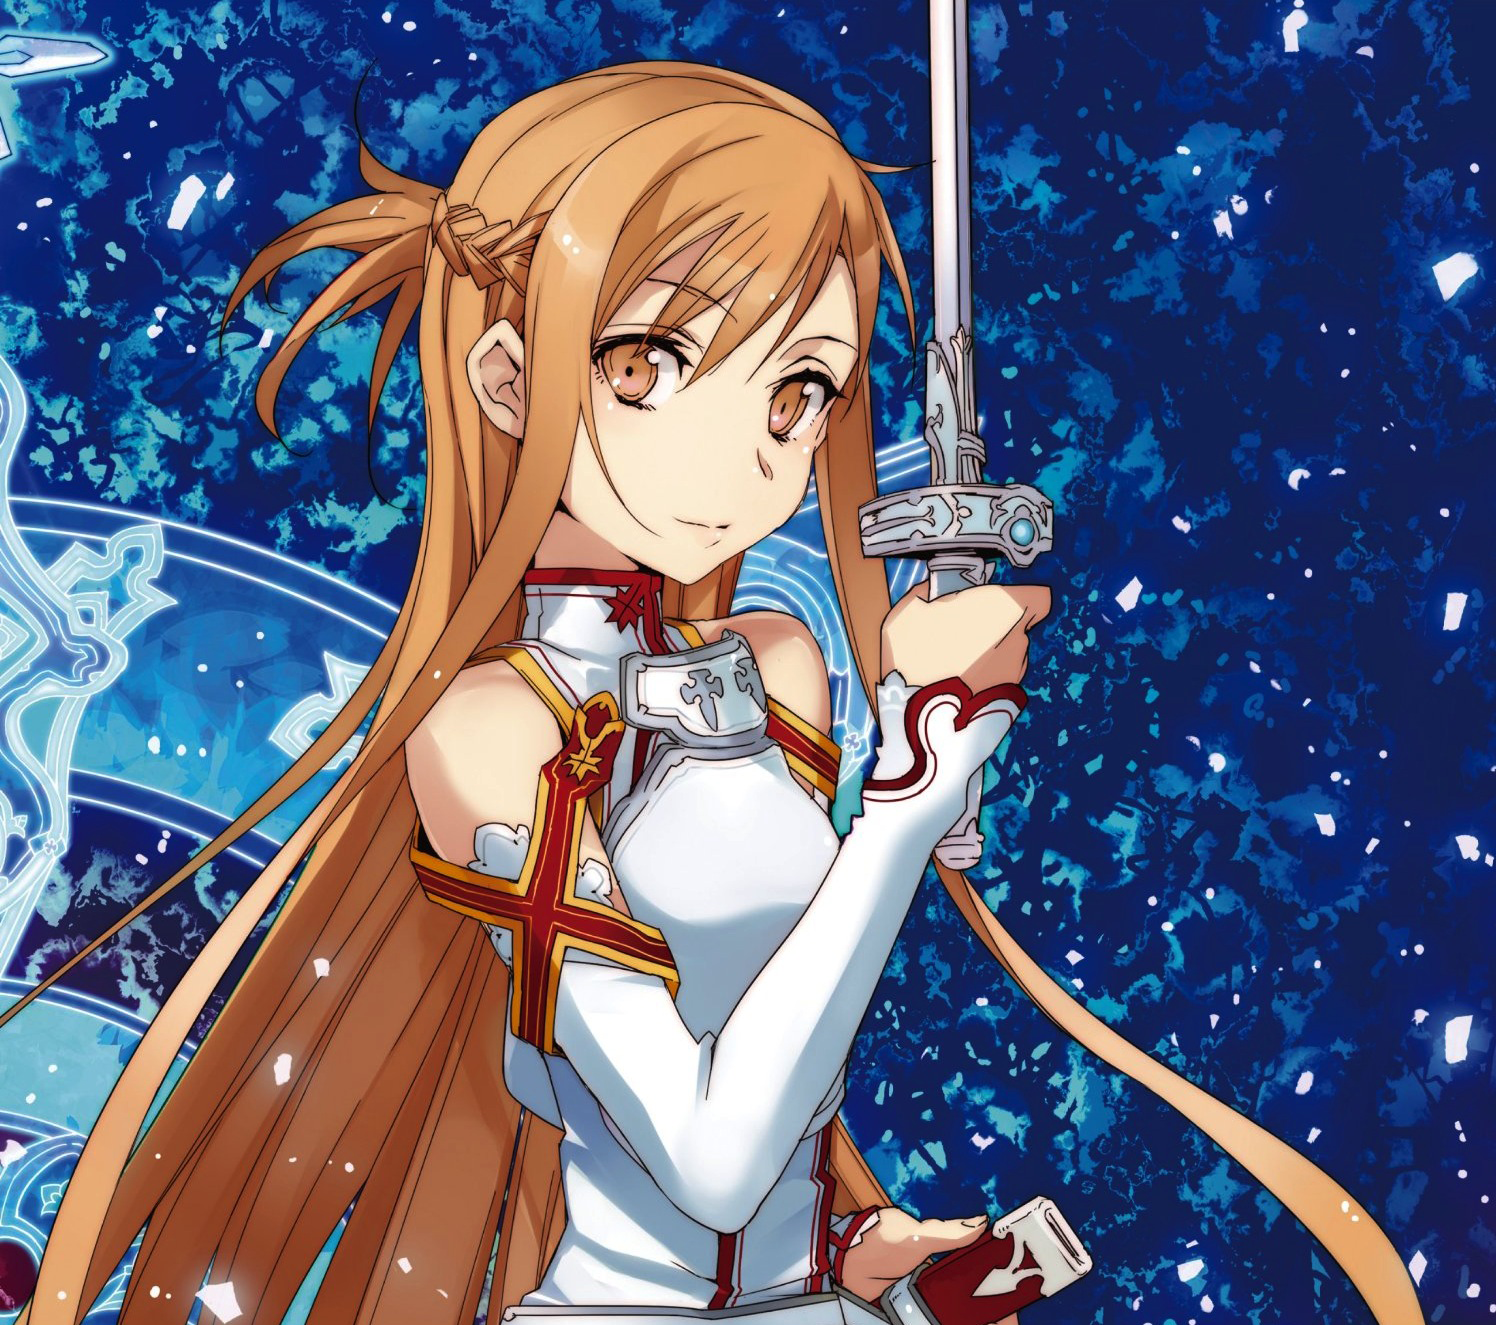 Lirik Lagu Crossing Field dari LiSA Original Soundtrack Anime Sword Art  Online versi Romanisasinya  Jabar hits